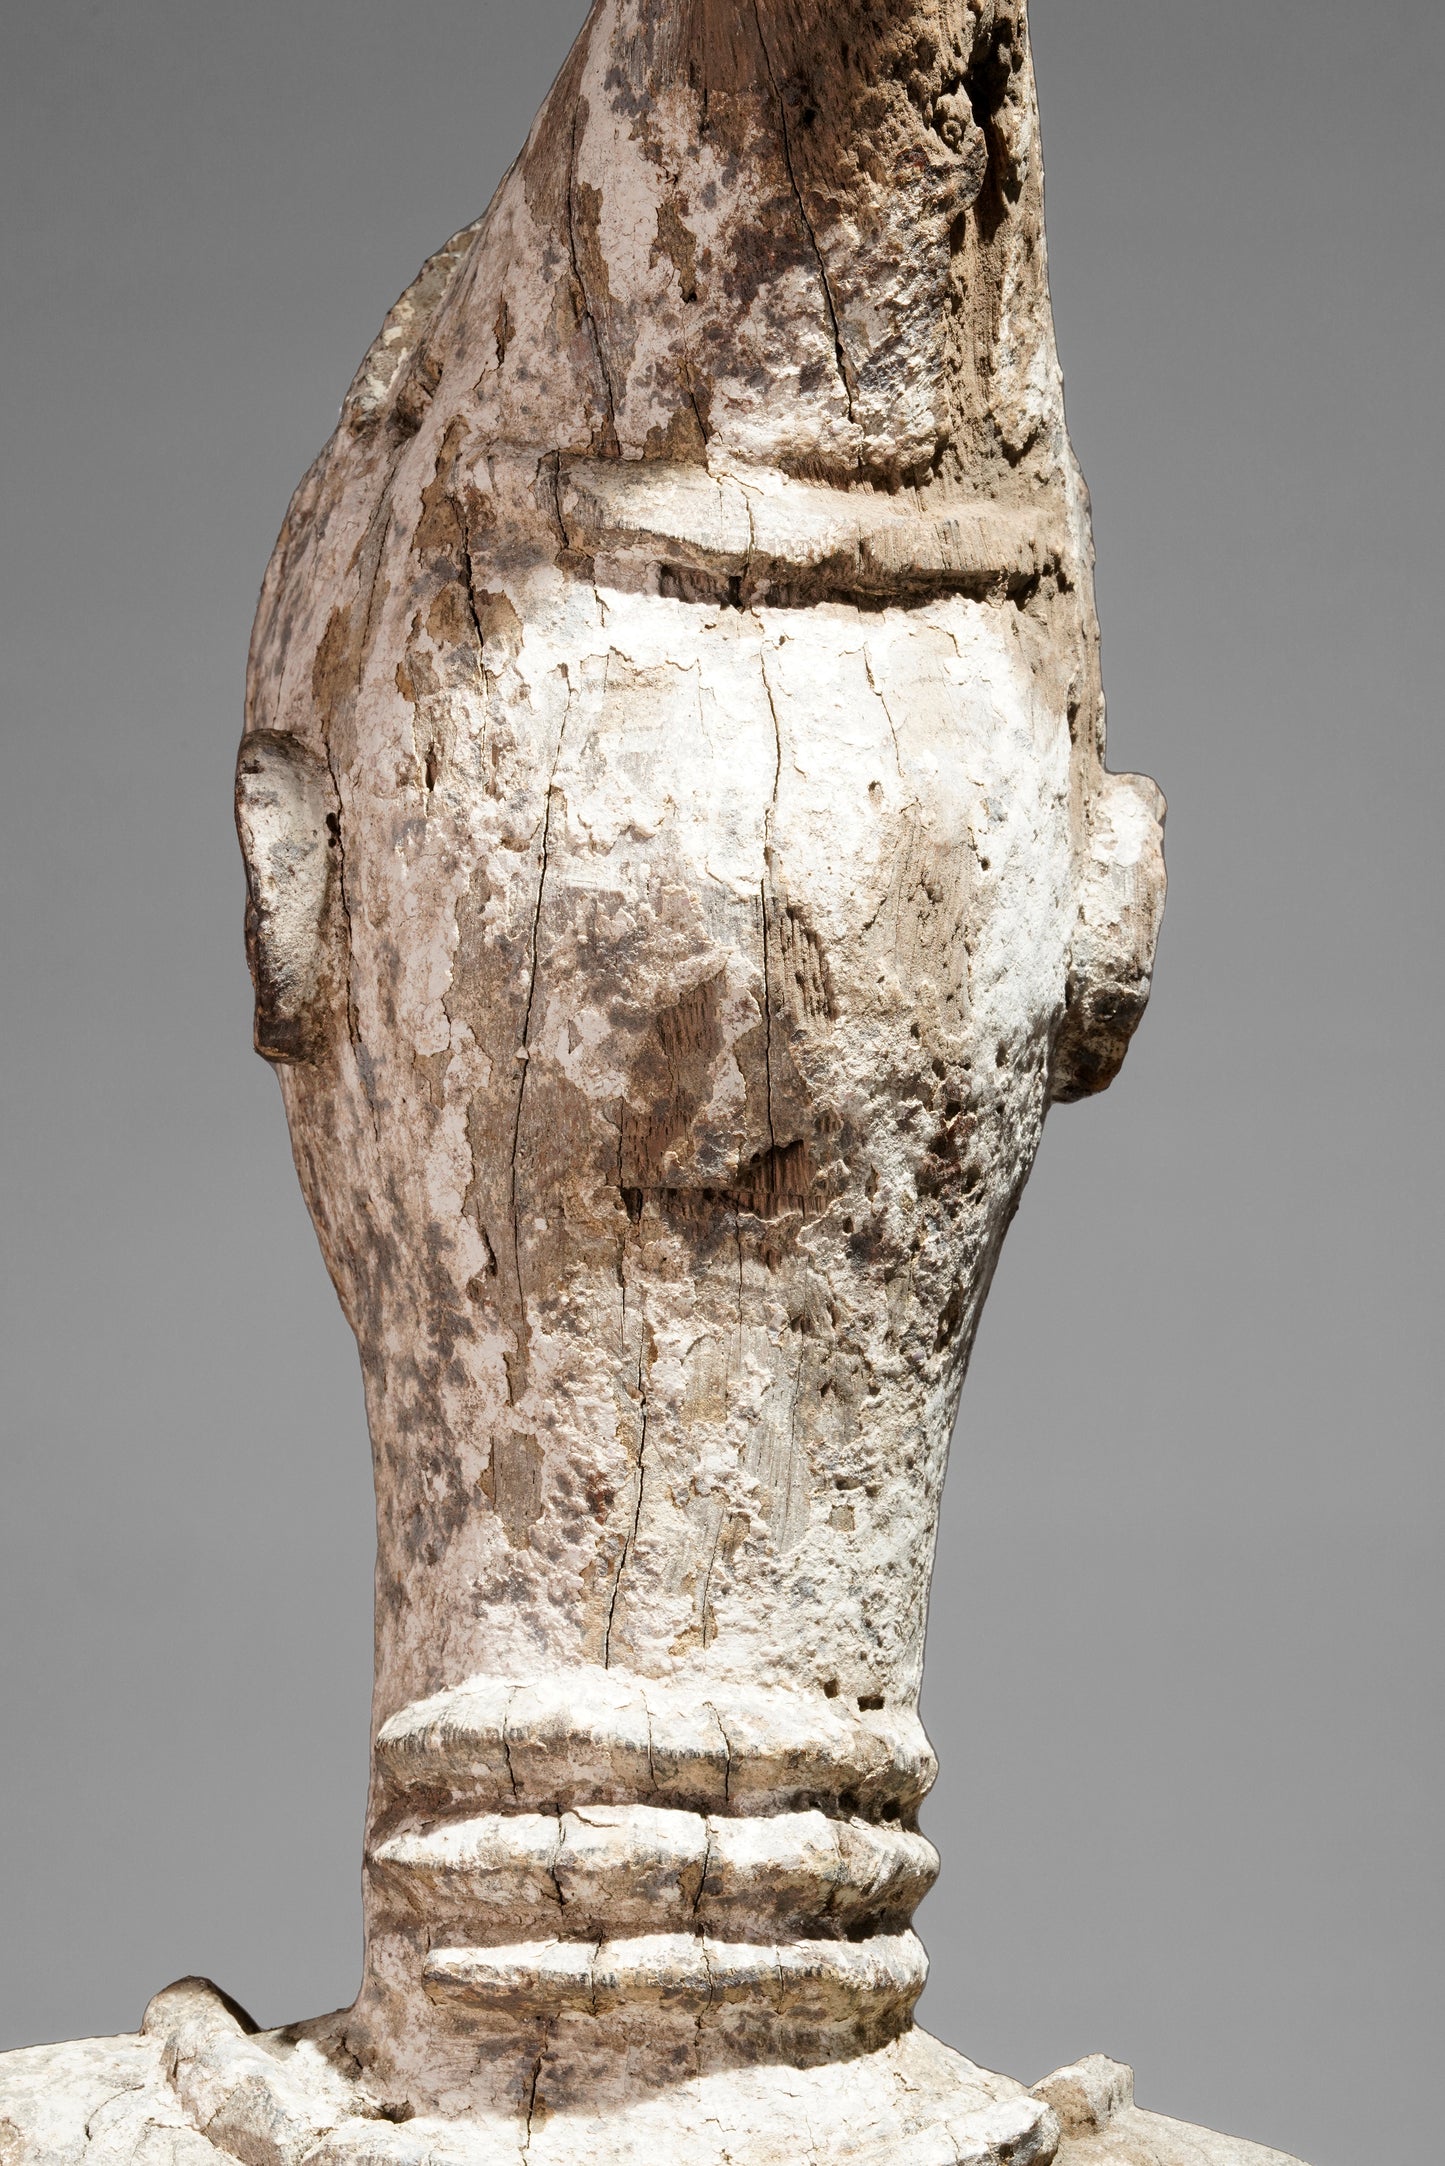 A very expressive female seated Urhobo sculpture